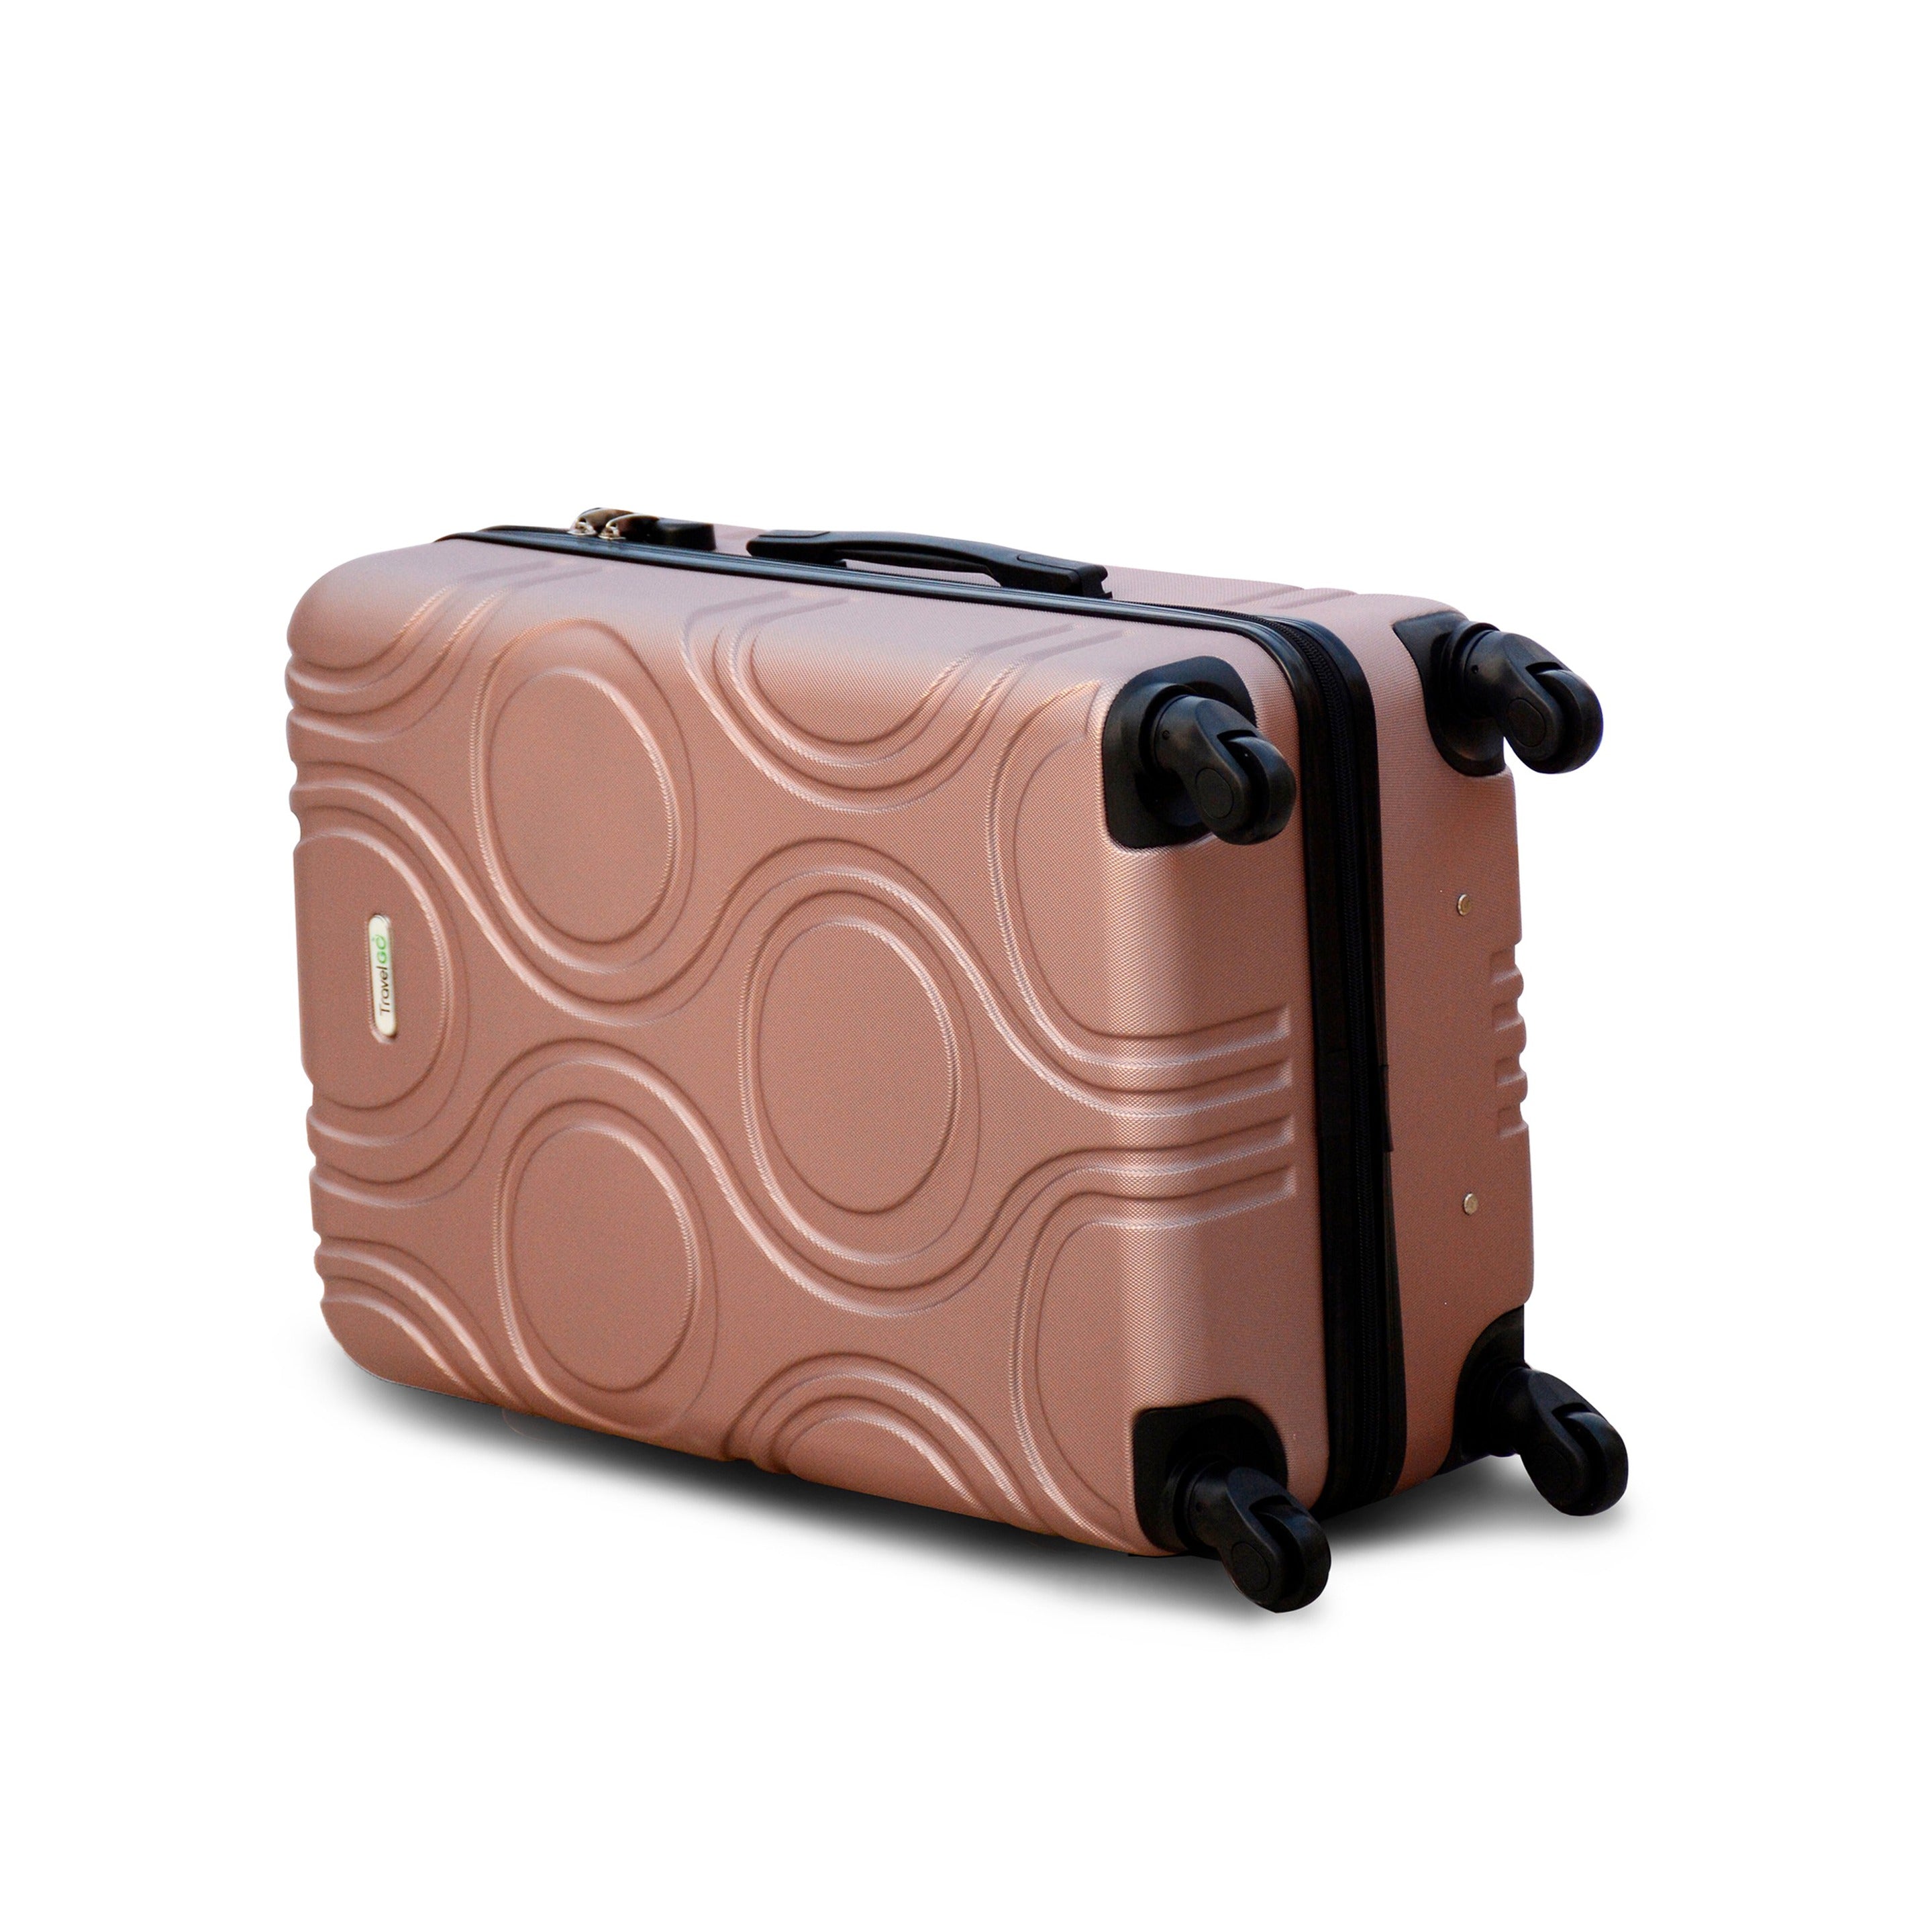 Yinton 2208 Rose Gold 20” Lightweight ABS Luggage | Hard Case Trolley Bag